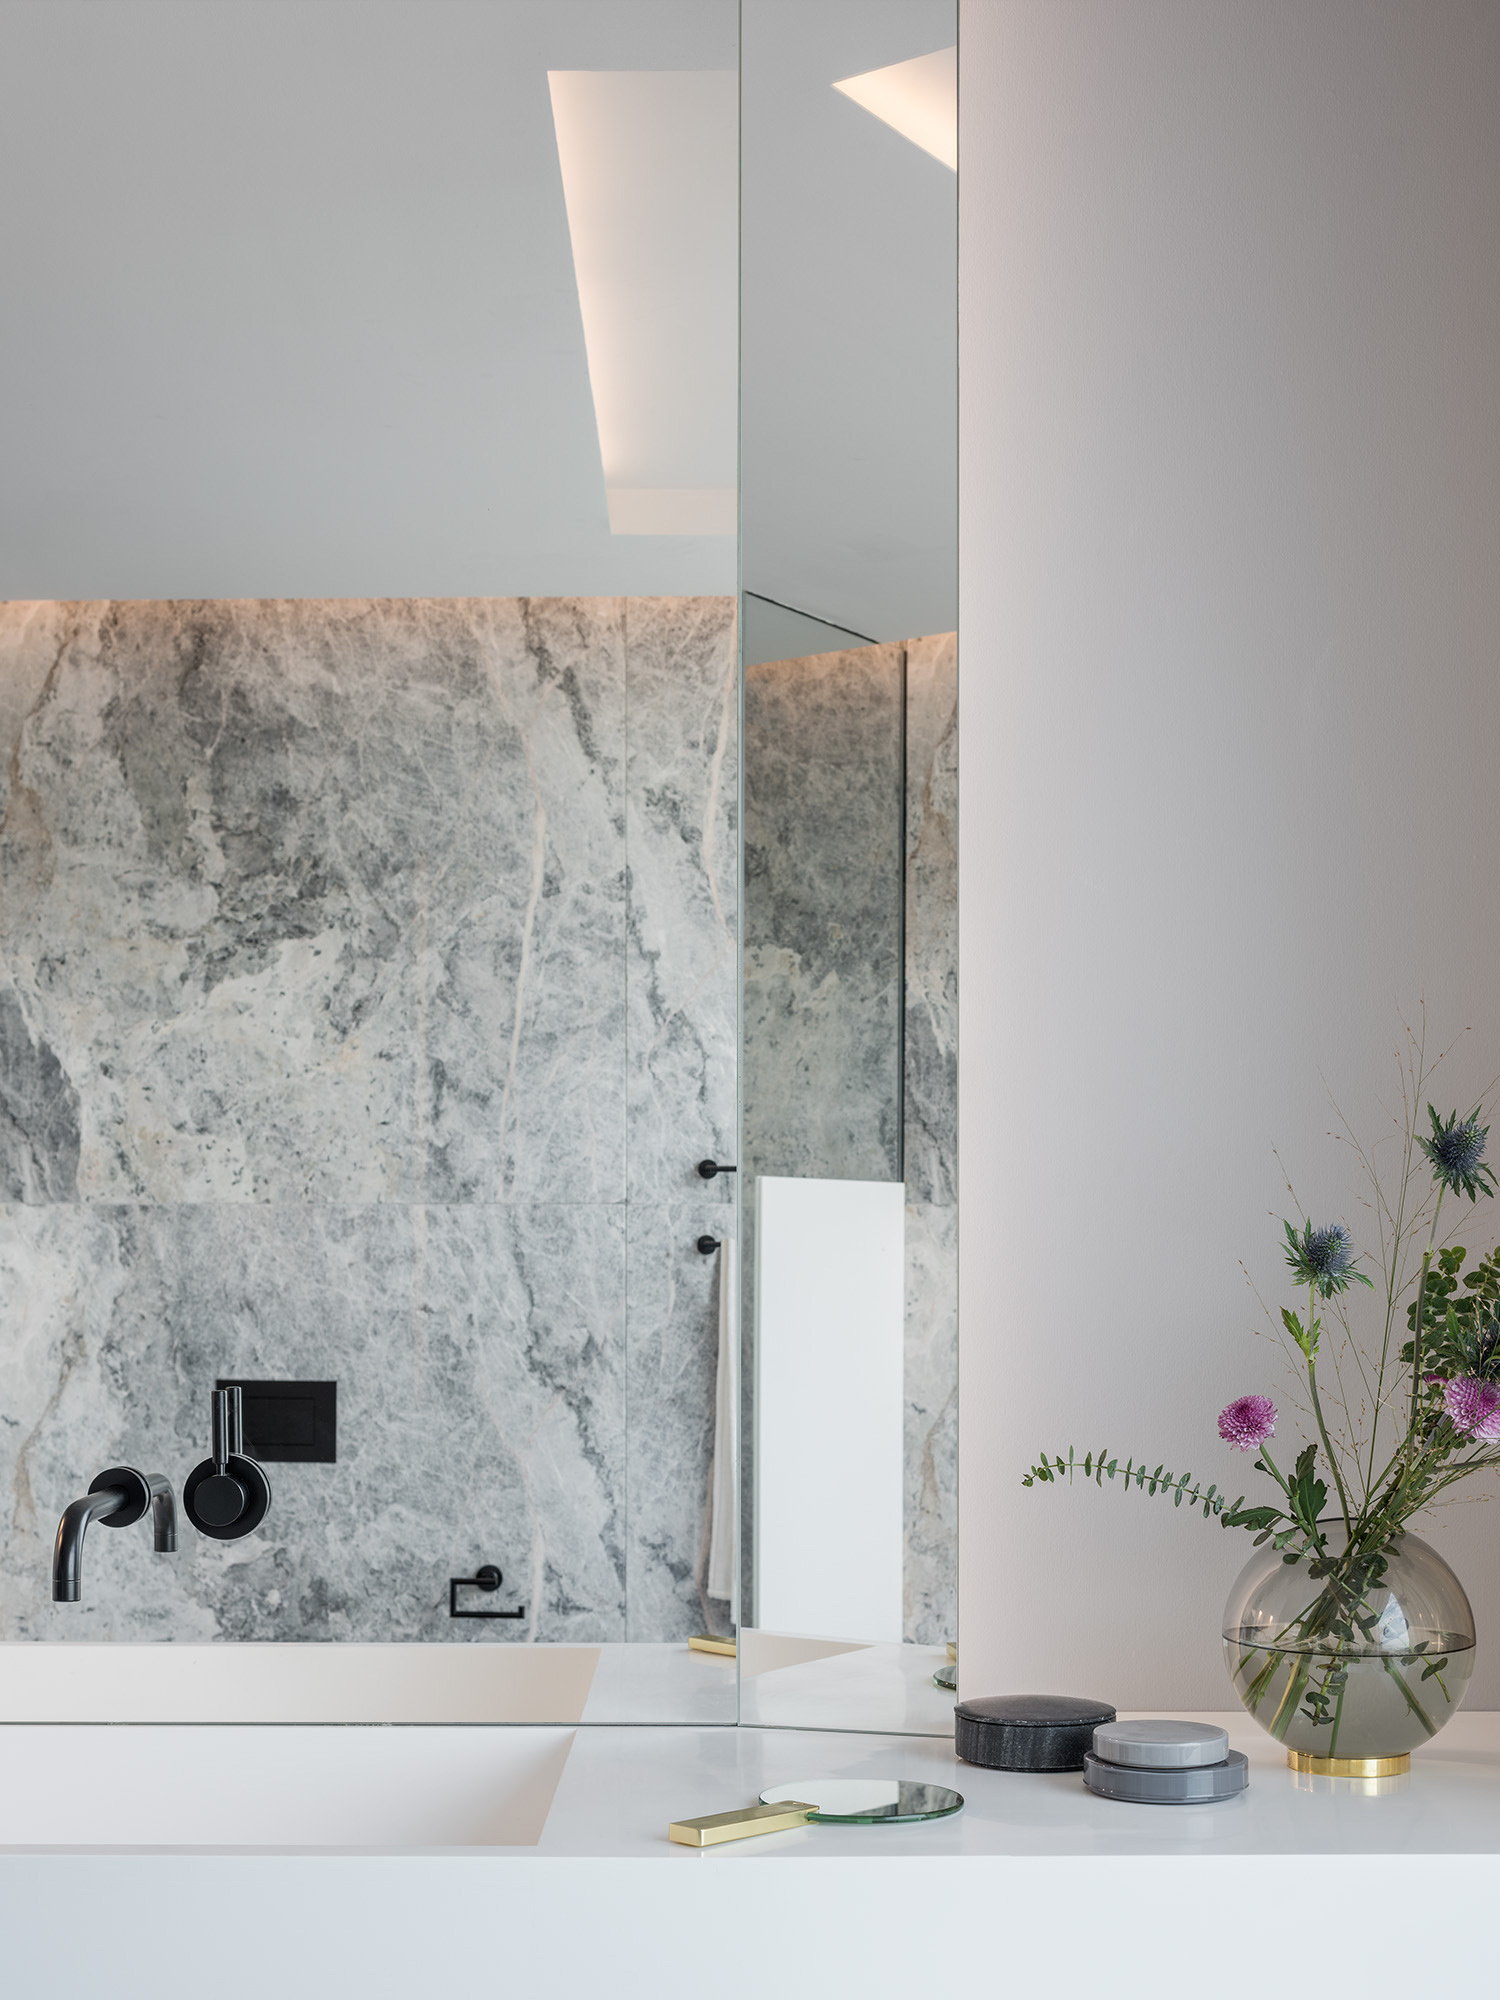 Shades of Grey Apartment Interior Design Shanghai, China - Ippolito Fleitz Group - Bathroom Vanity Detail